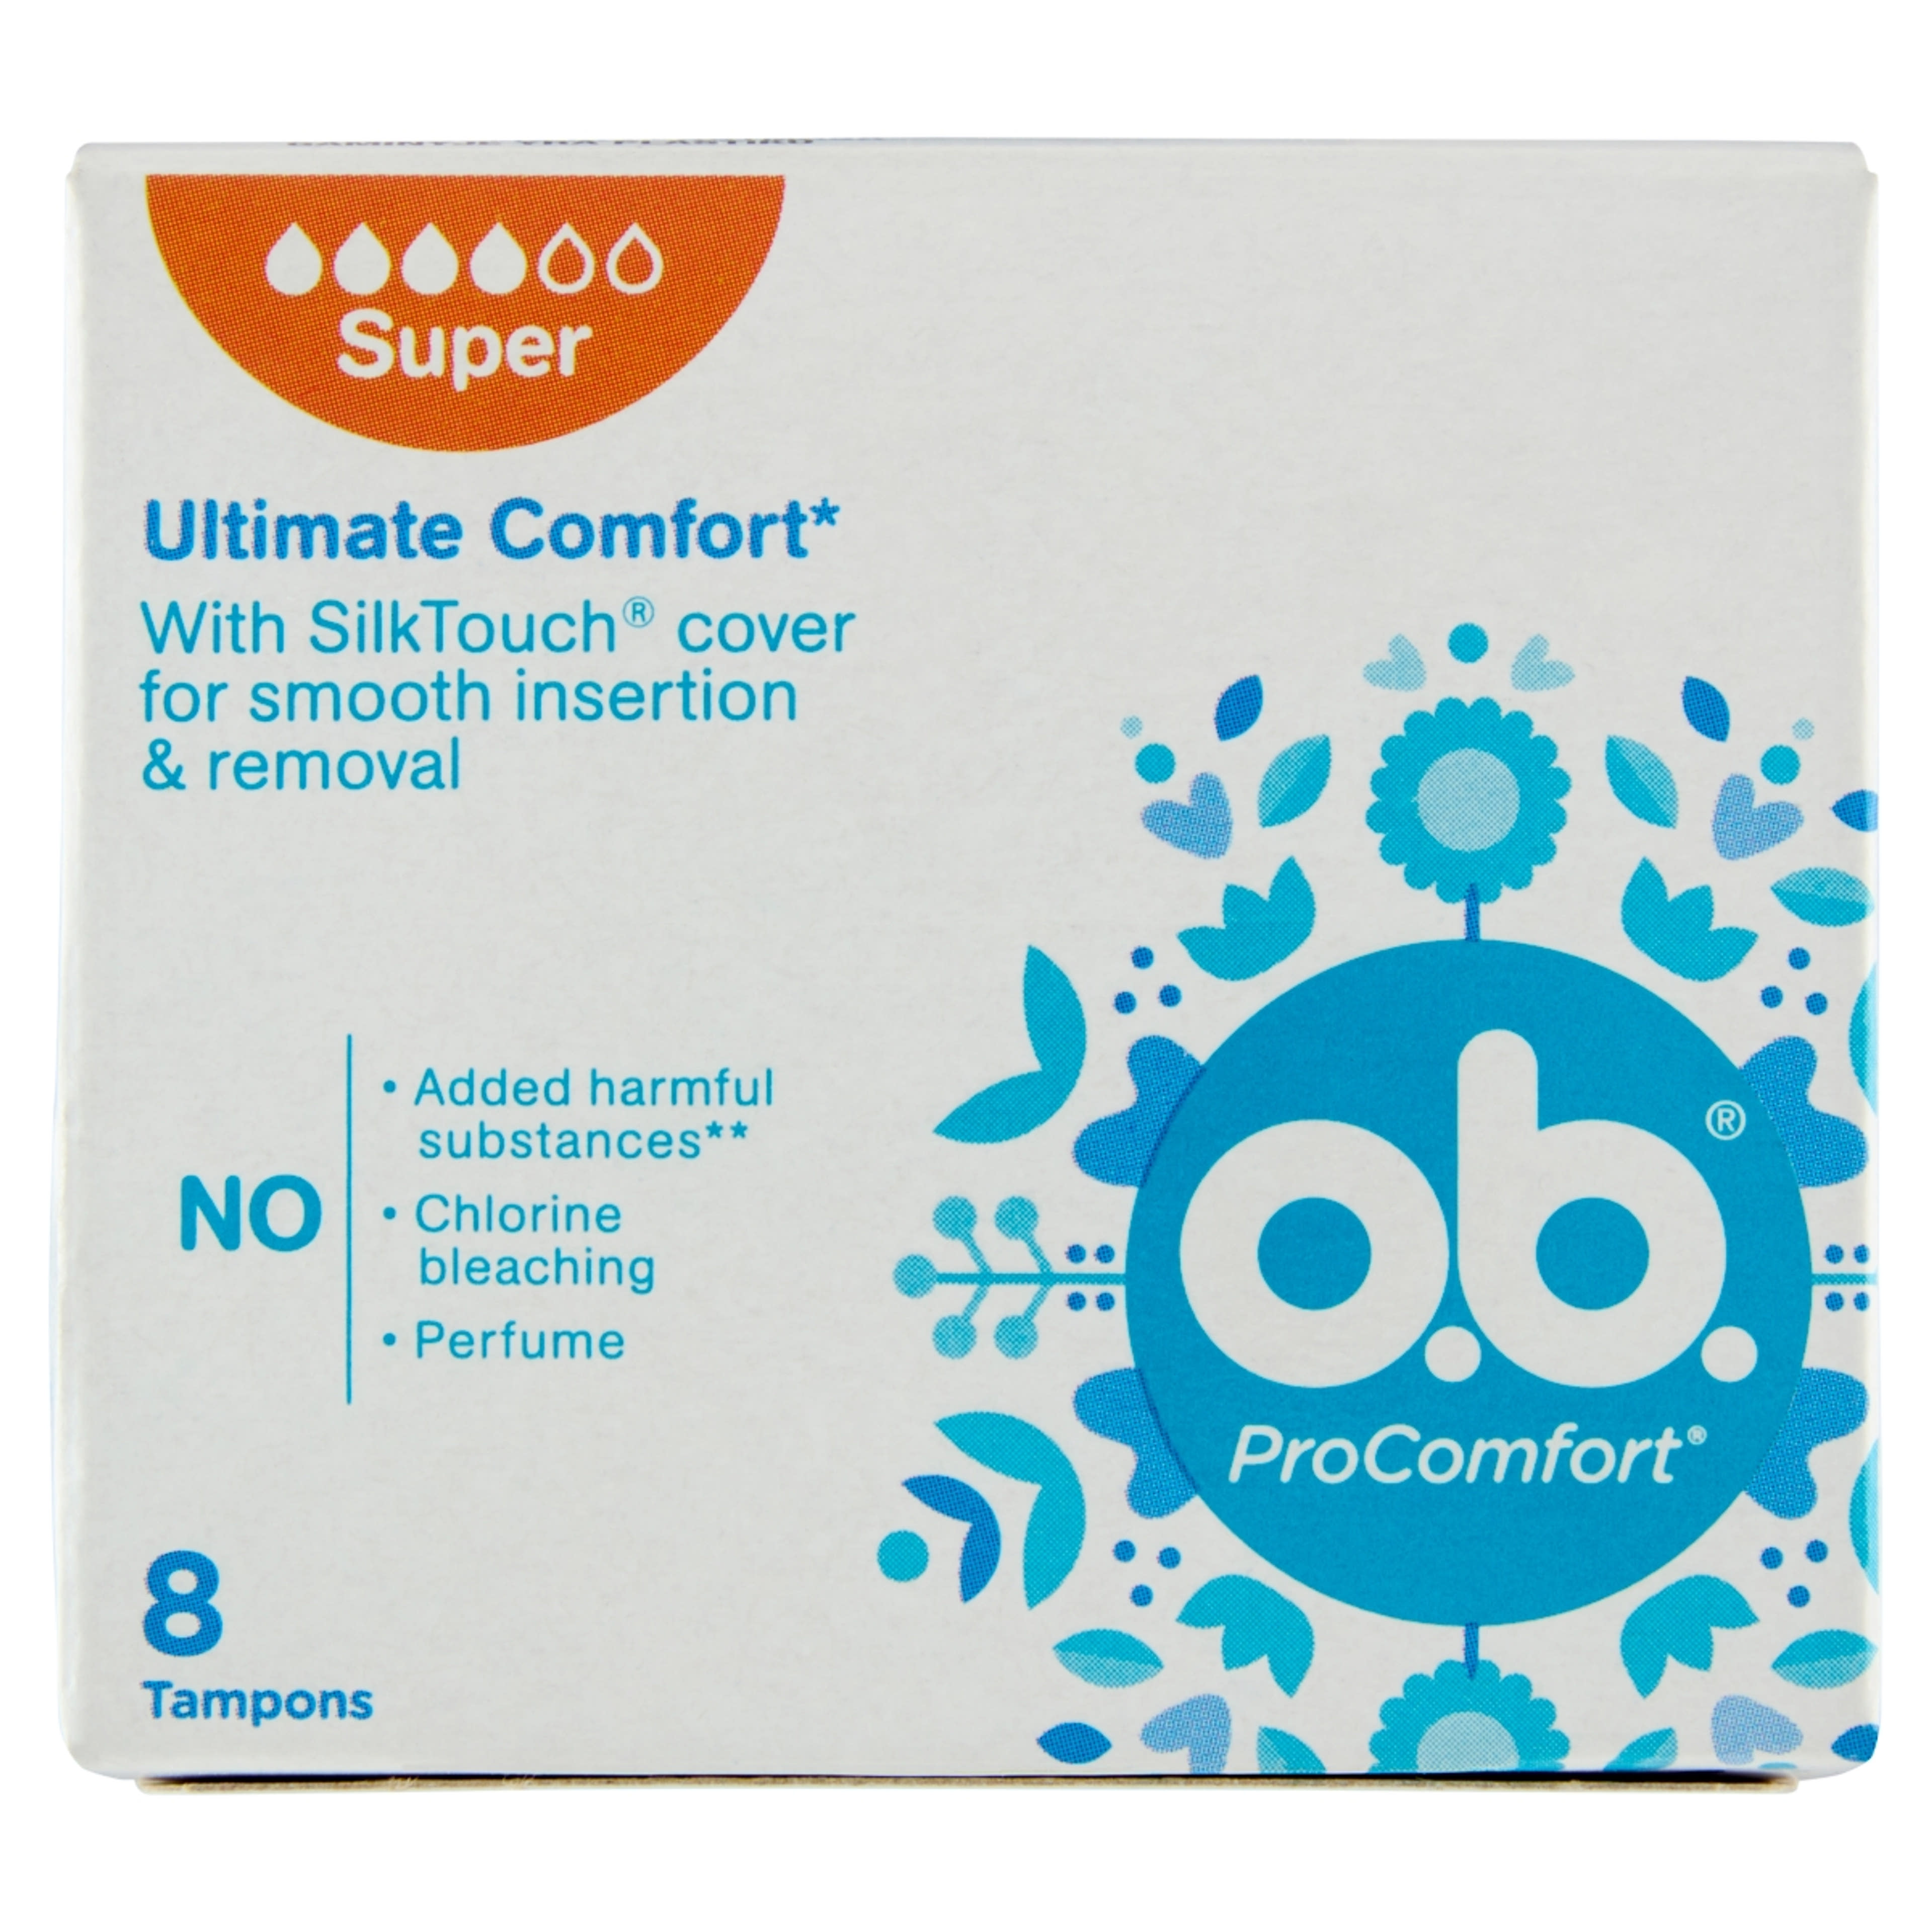 o.b. ProComfort super - 8 db